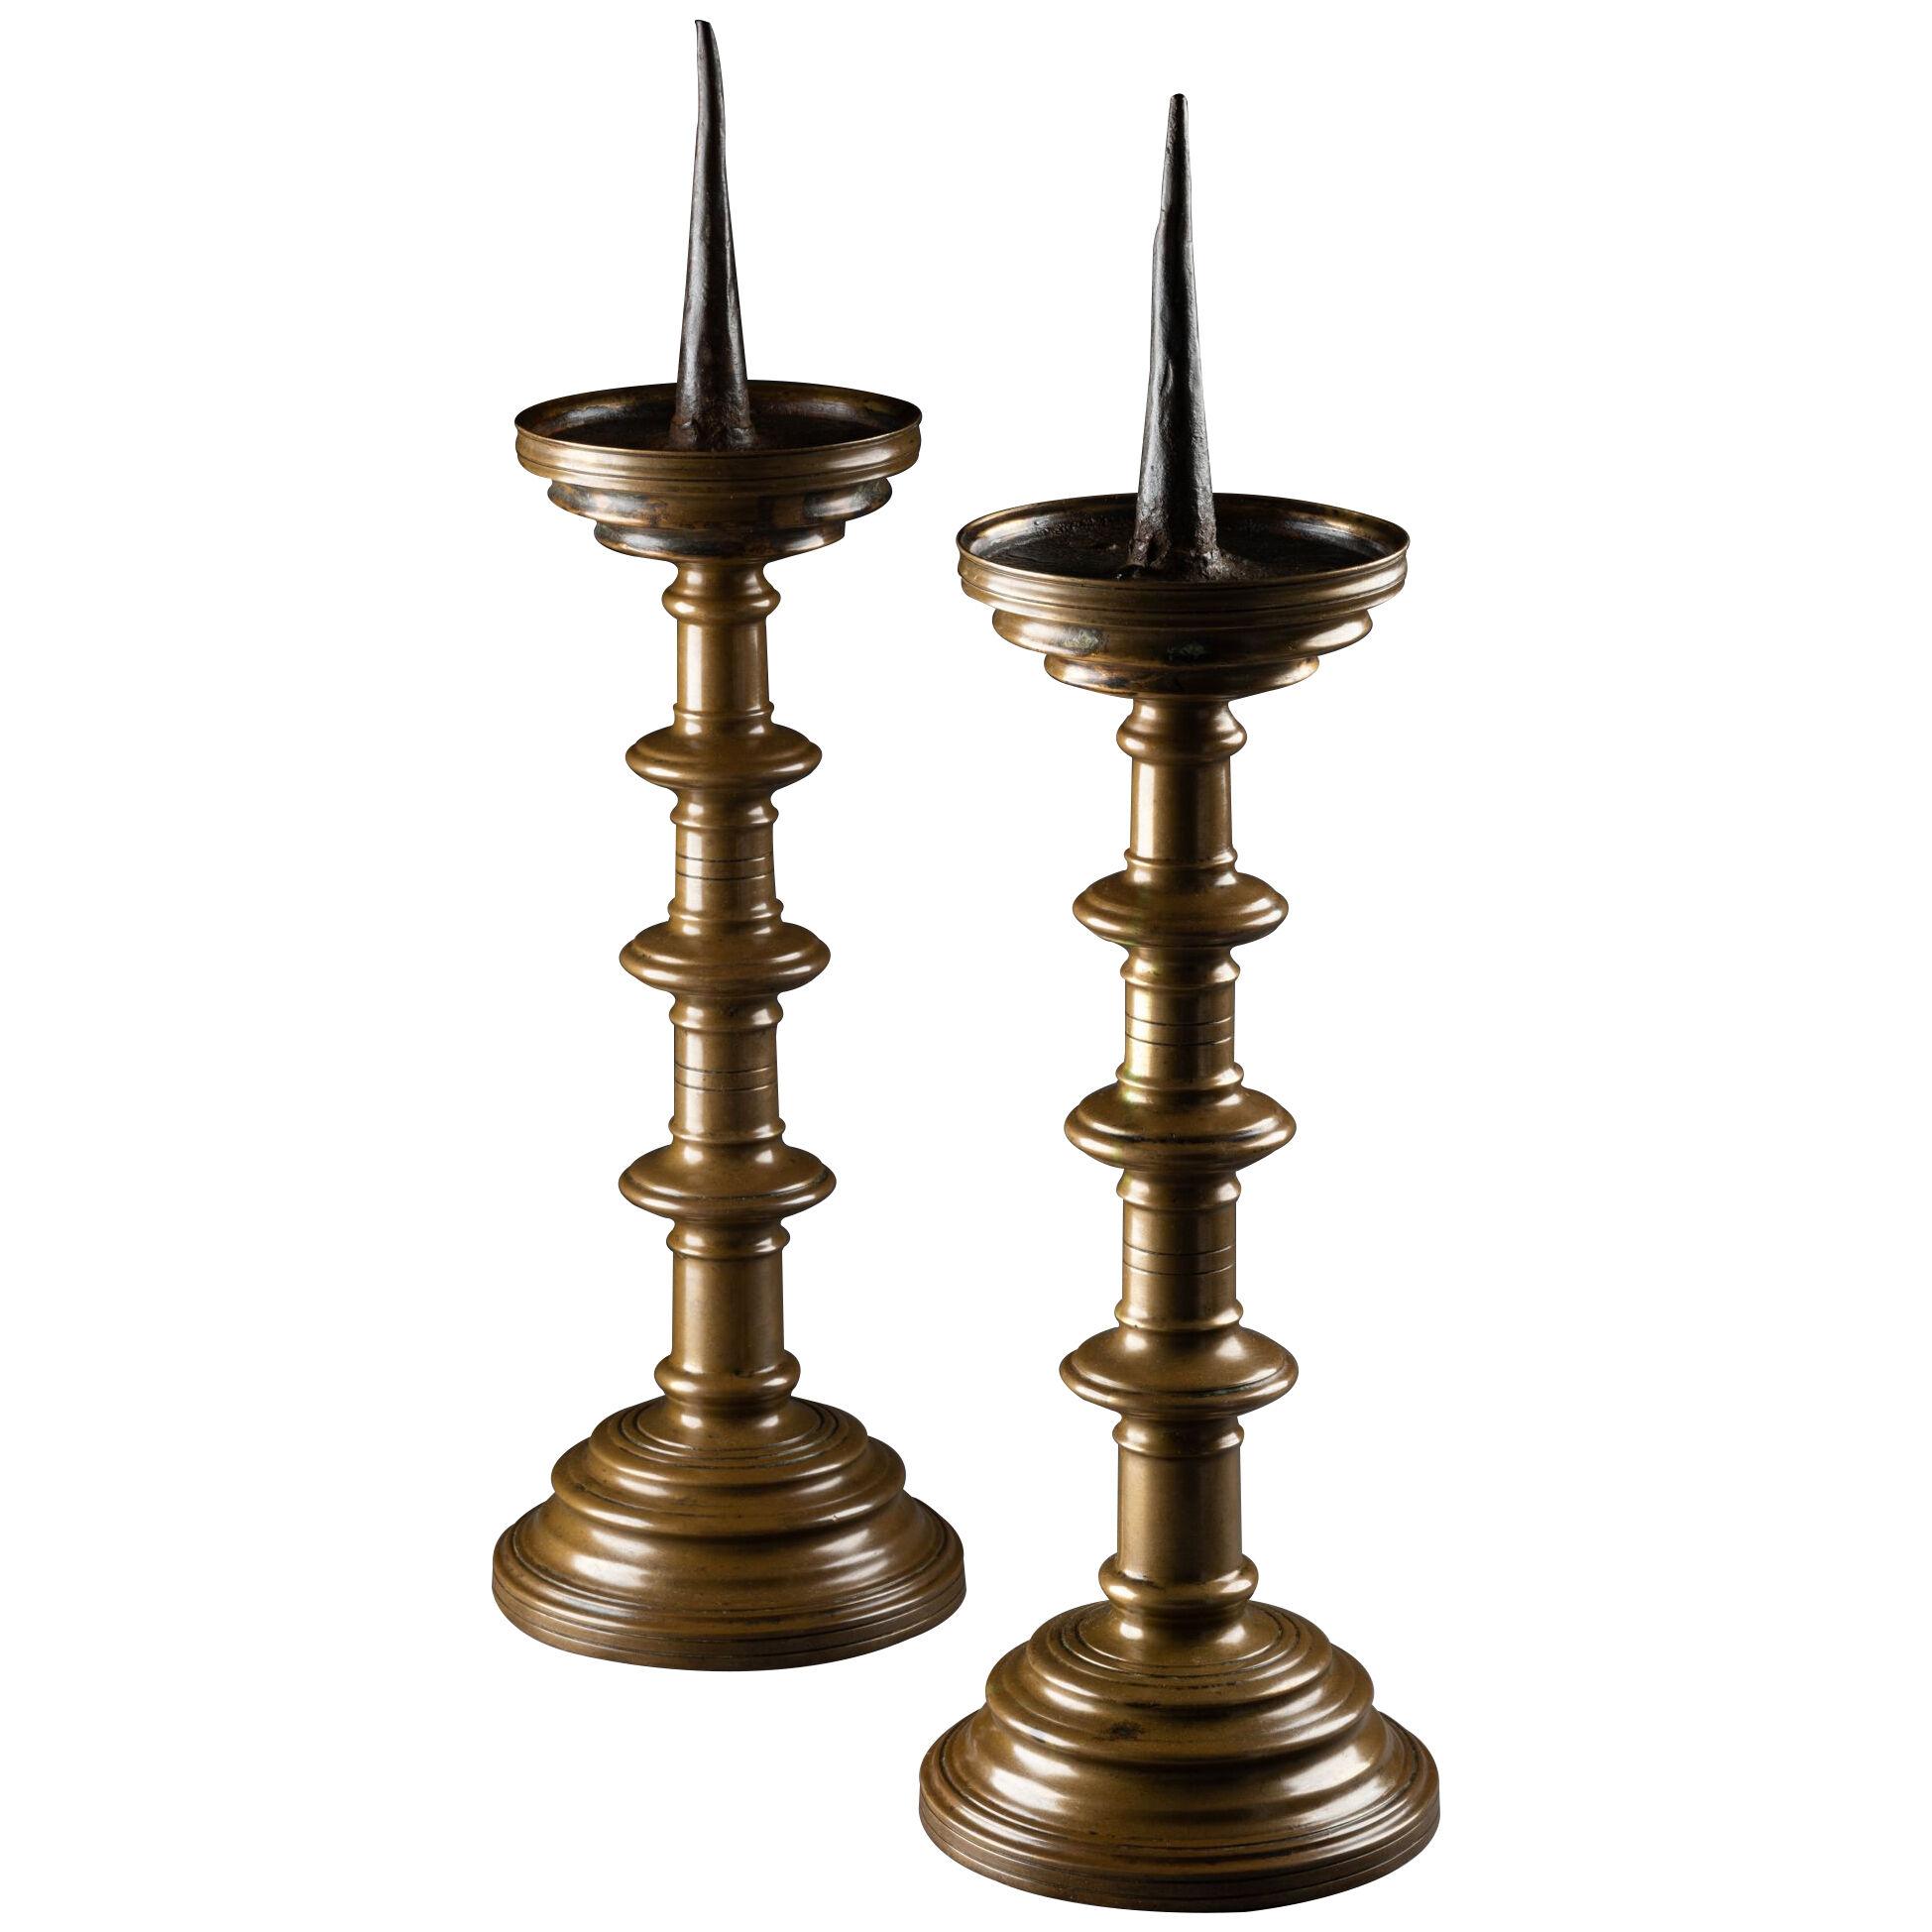 Pair of bronze candlesticks - Central Europe - circa 1500